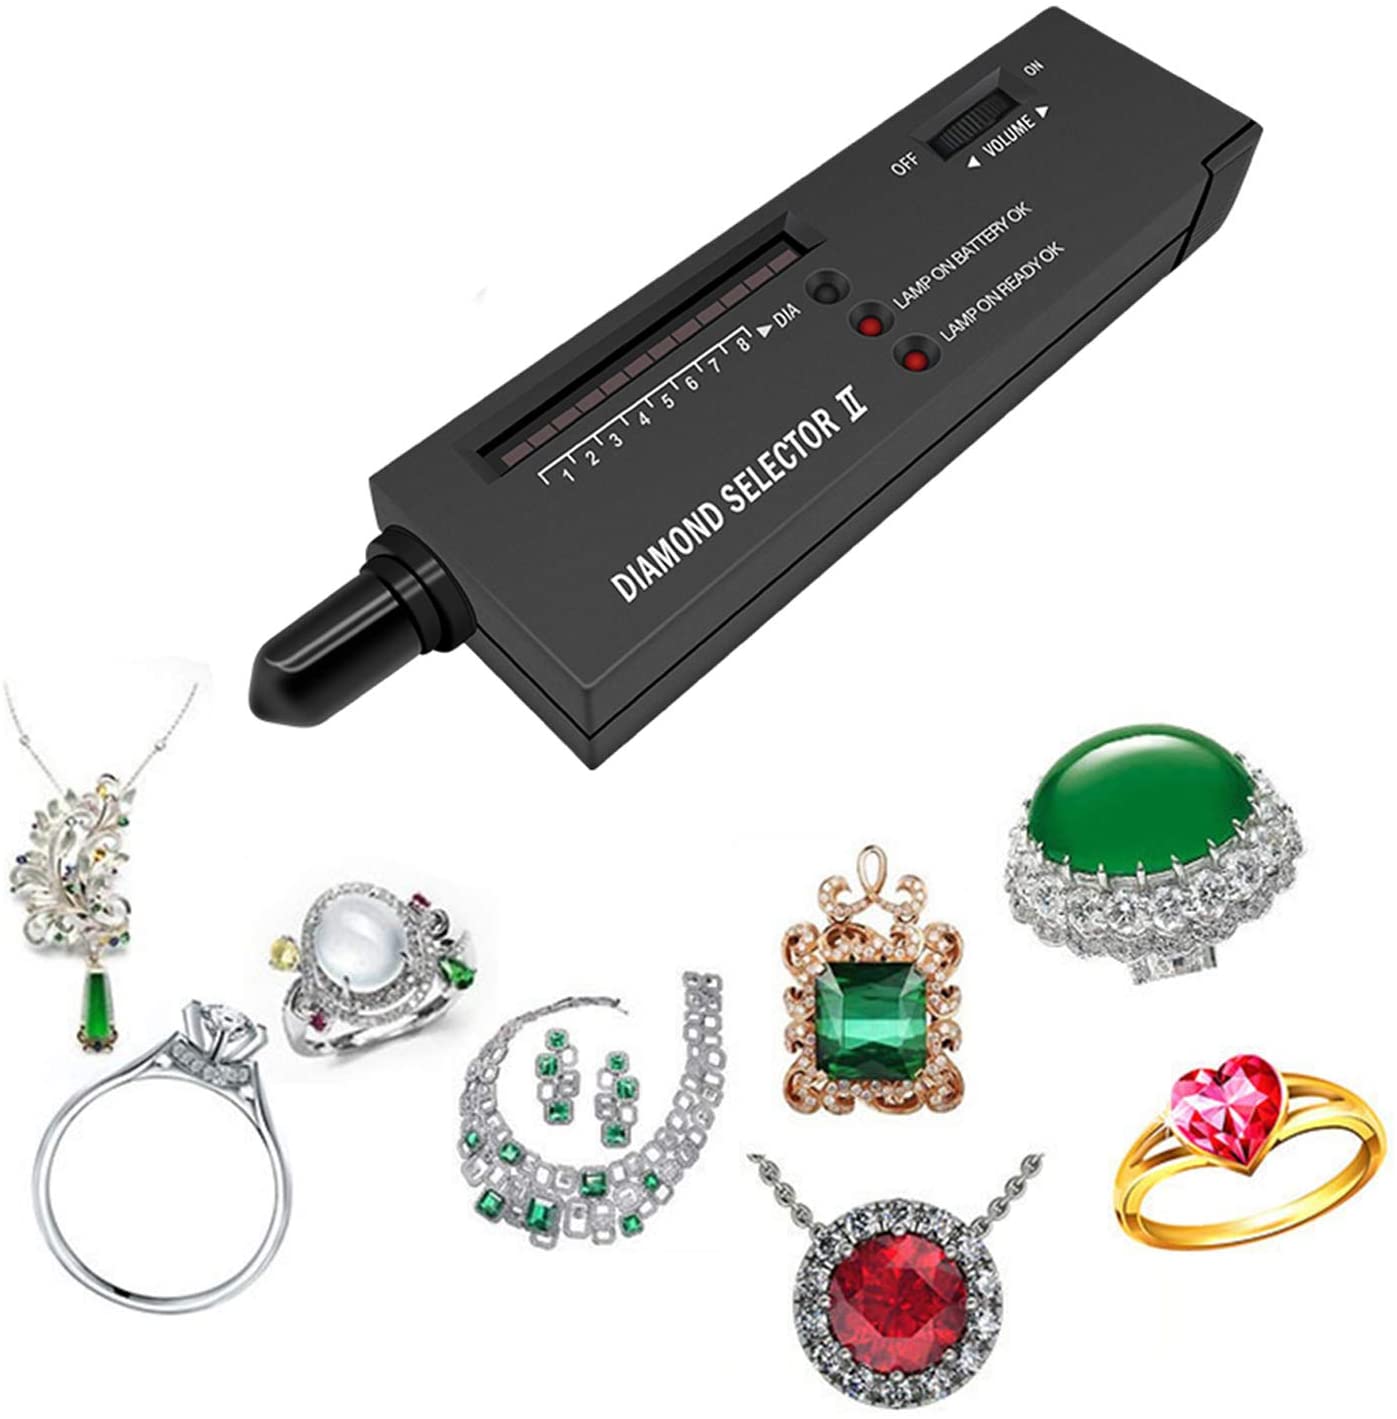 pupuka Pupuka Diamond Tester Pen, High Accuracy Jewelry